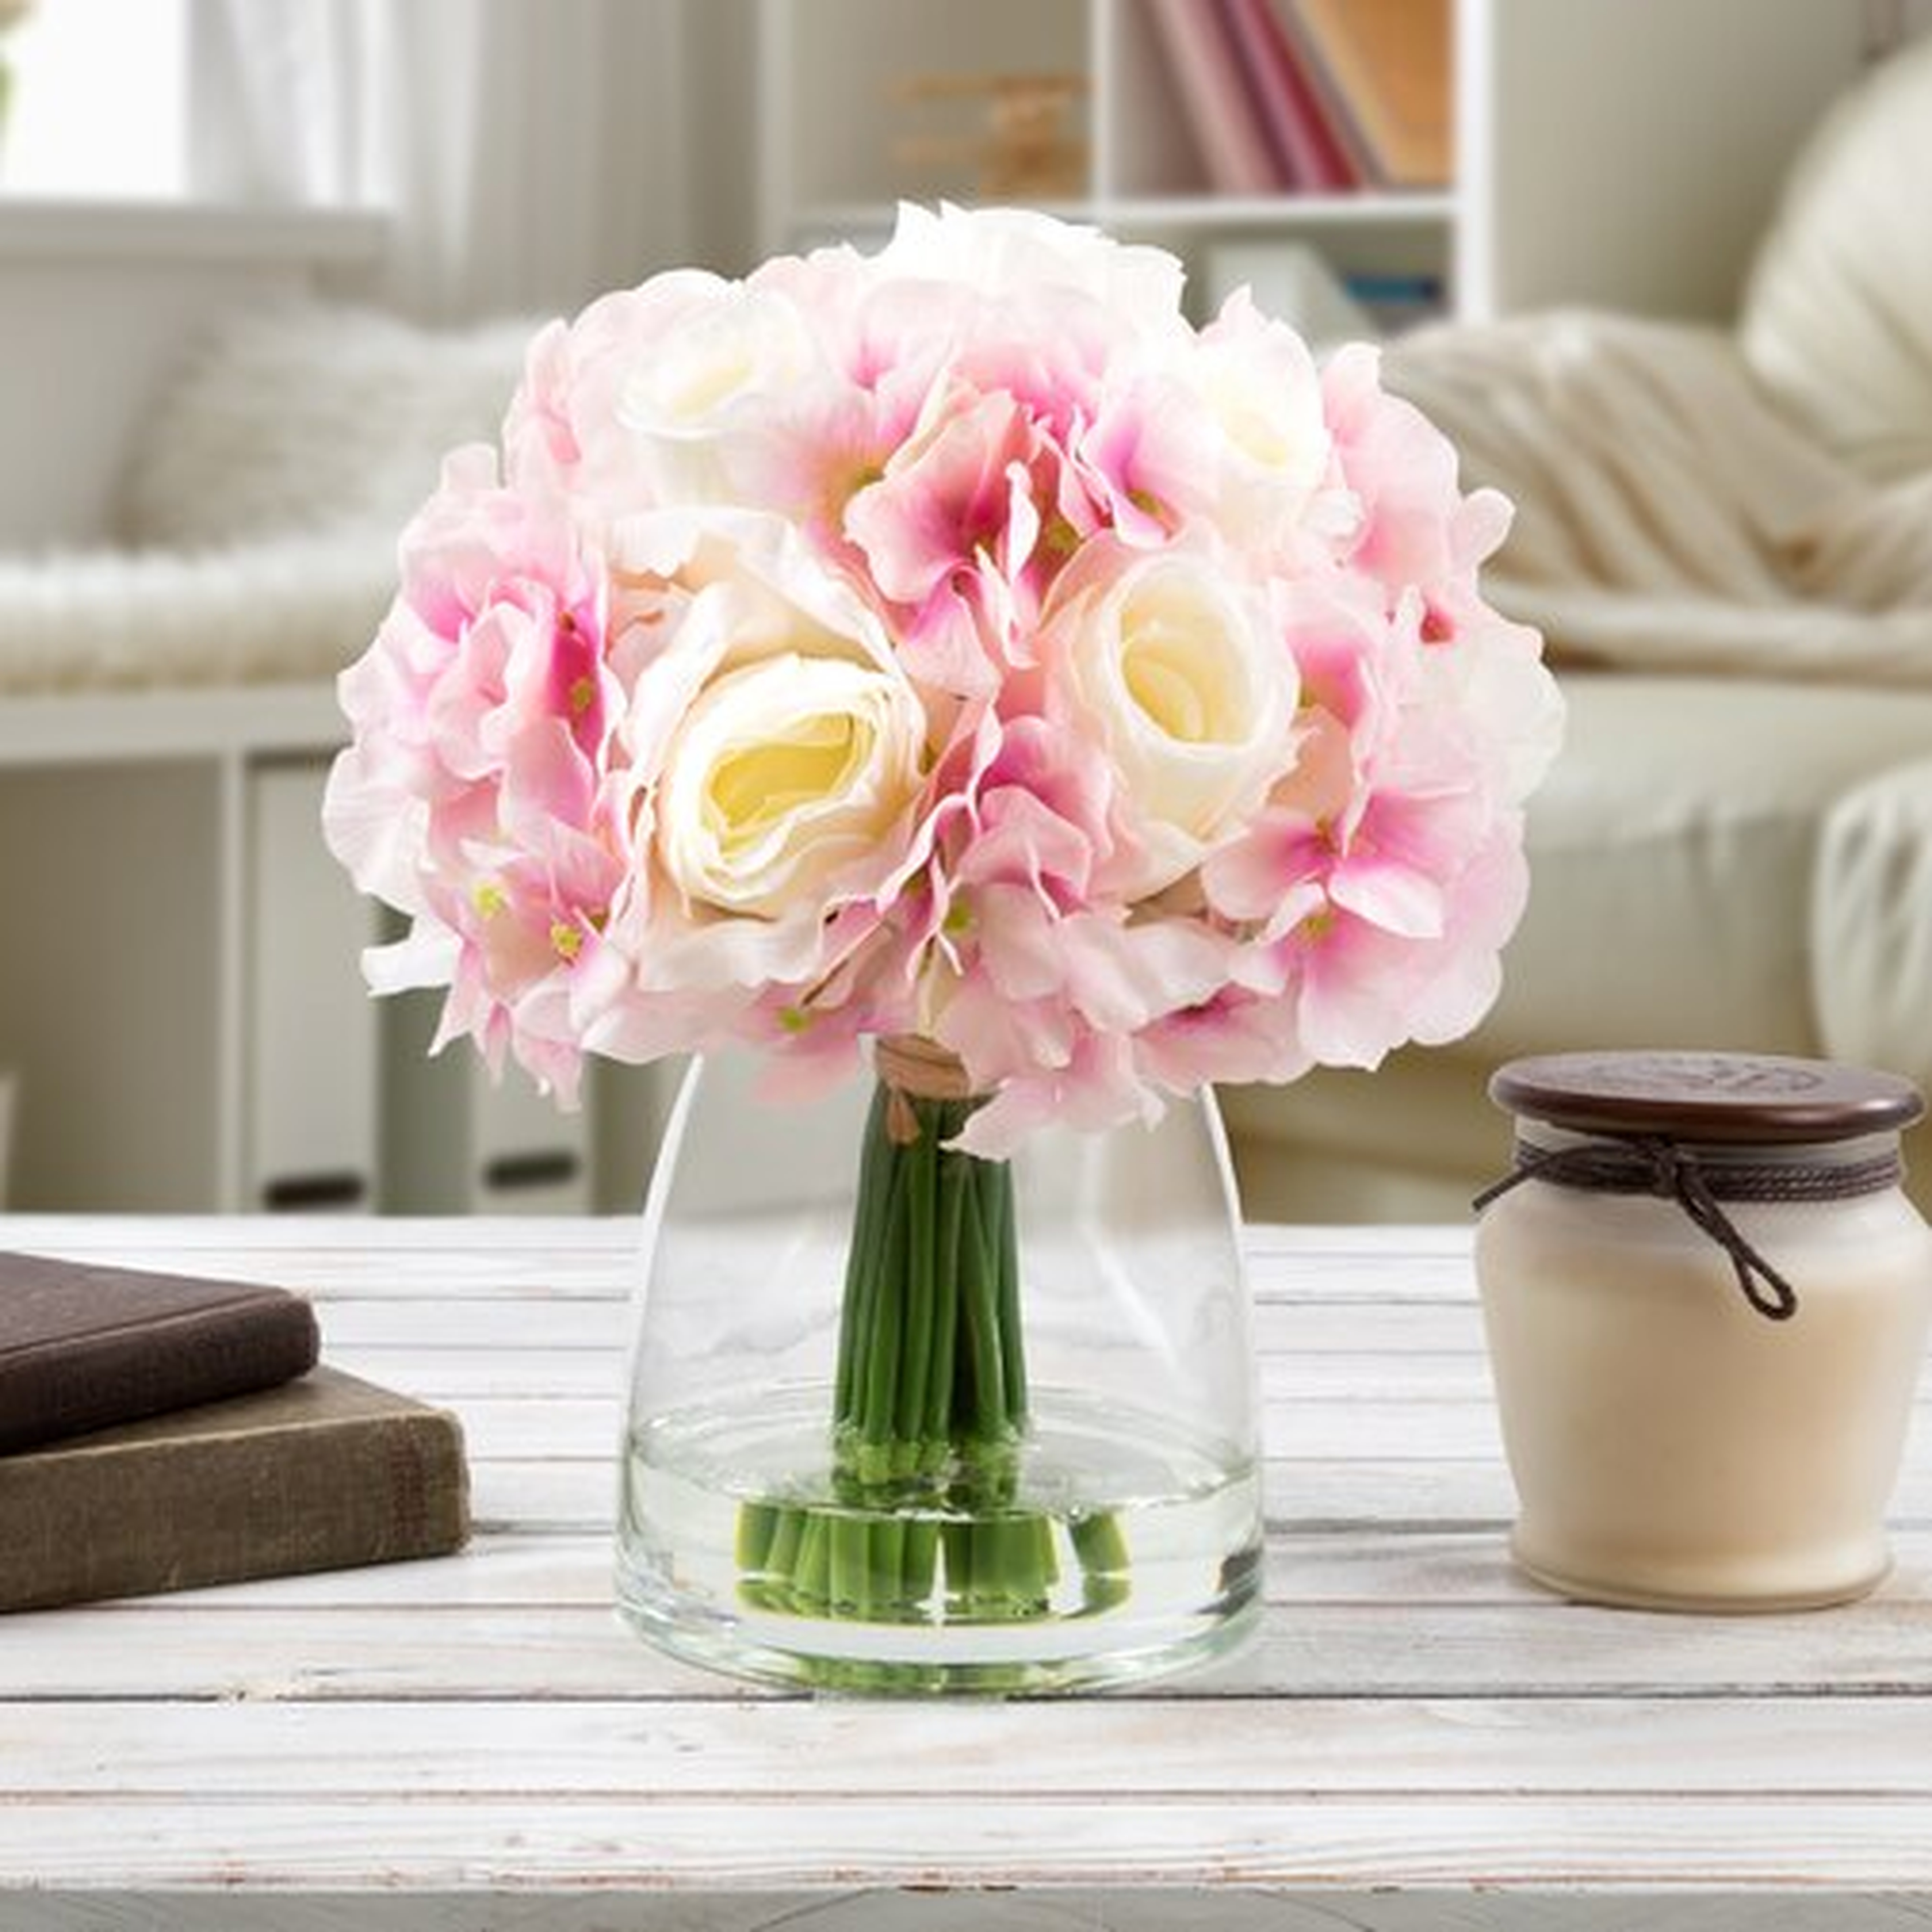 Hydrangea and Rose Floral Arrangement in Glass Vase - Wayfair